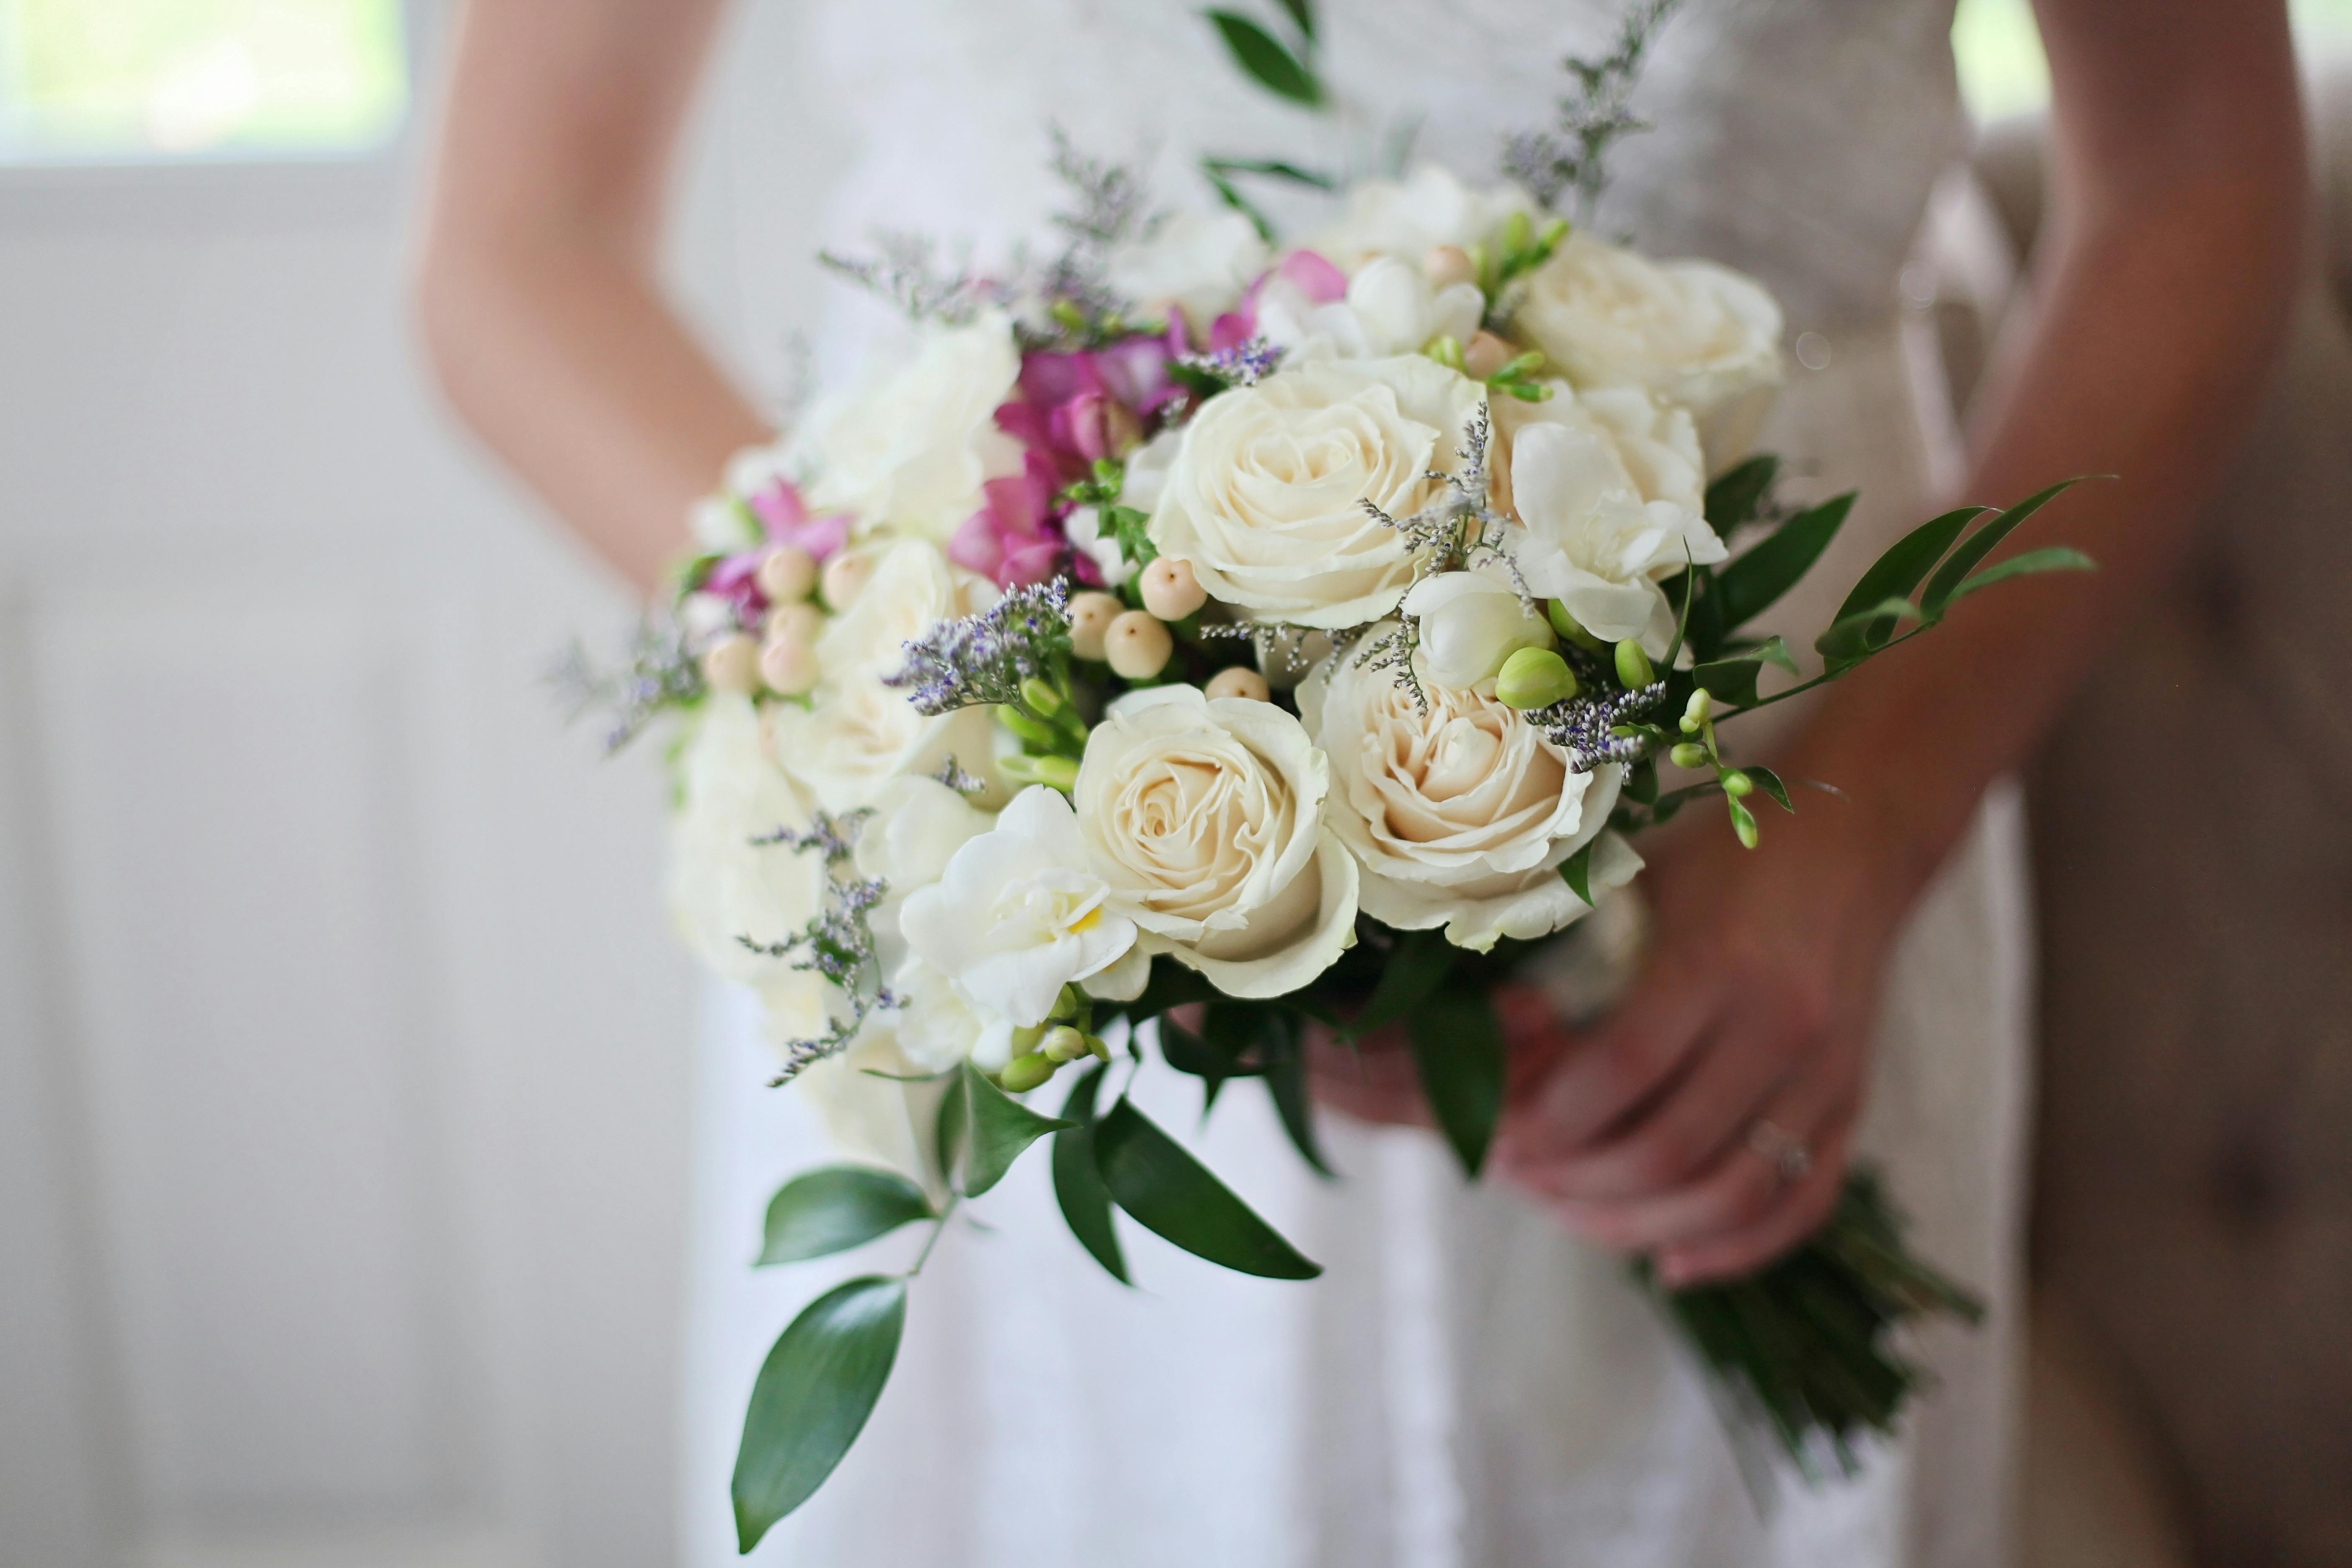 648100 Wedding Flowers Stock Photos Pictures  RoyaltyFree Images   iStock  Wedding bouquet Wedding Flowers